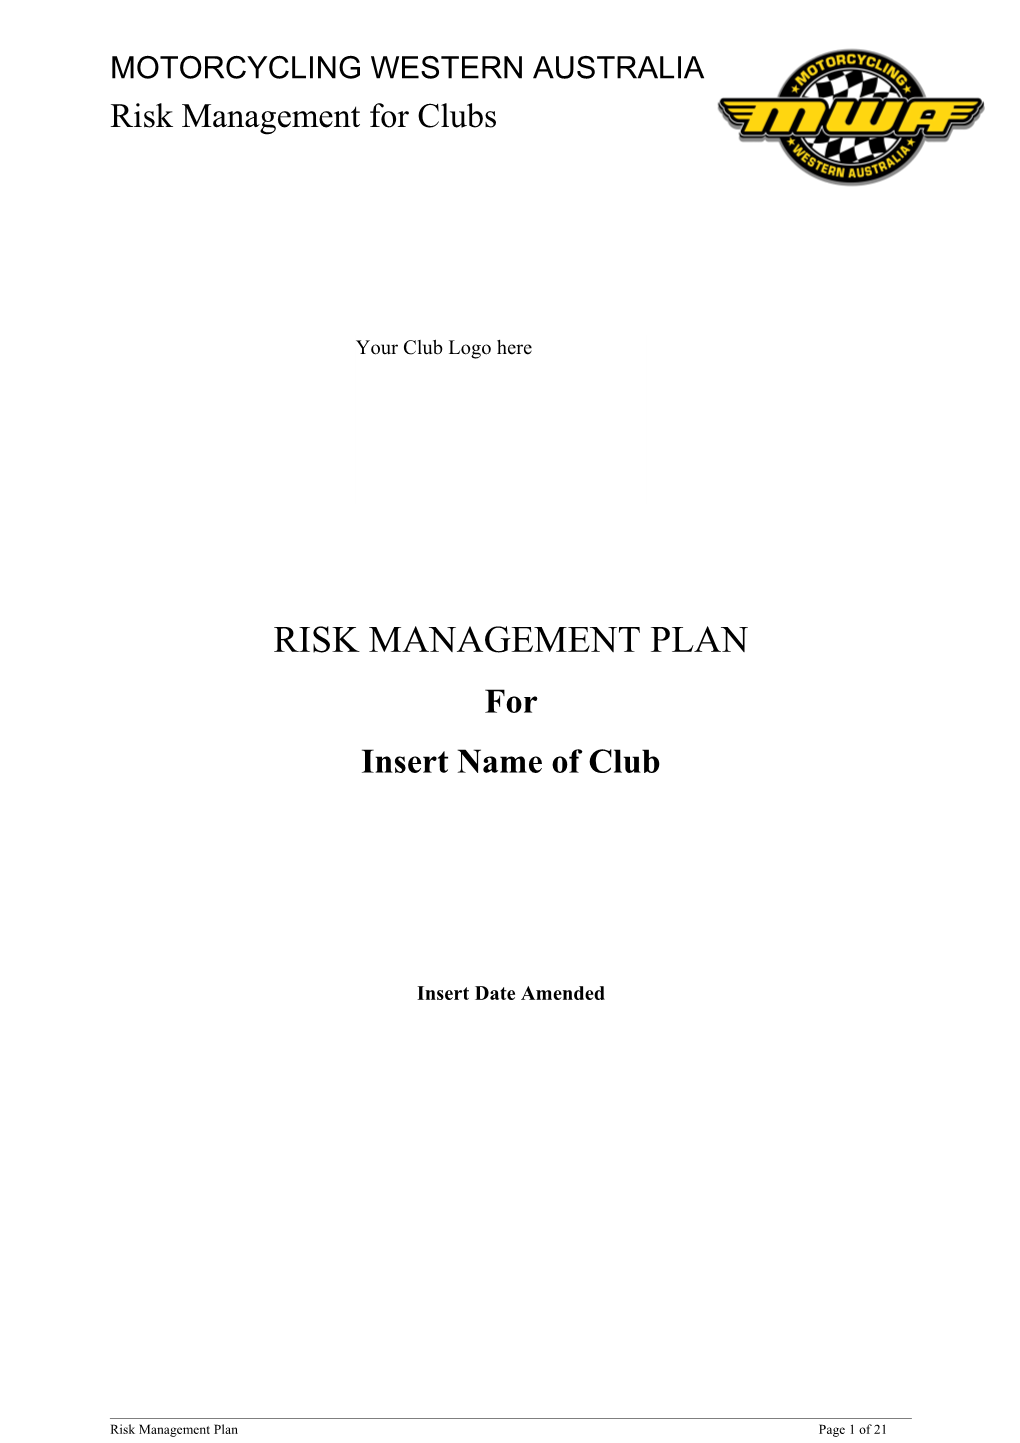 Risk Management for Clubs